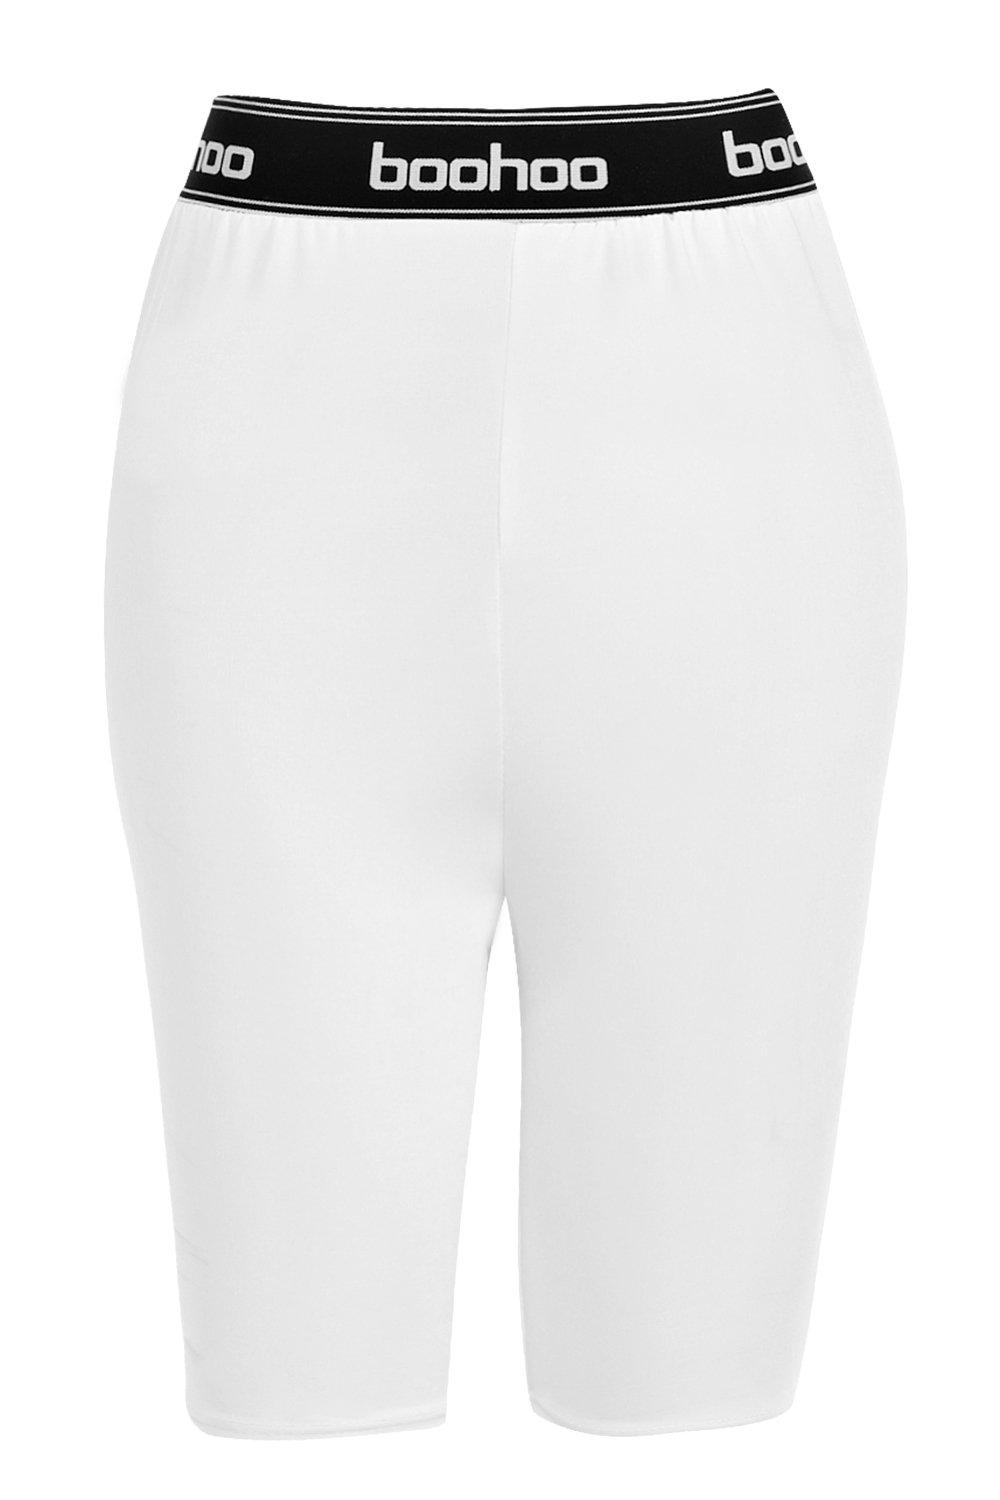 Street style today Shirt - @boohoo Cycle shorts - Primark leggings cut into  shorts Shoes - @buffalolondon G…